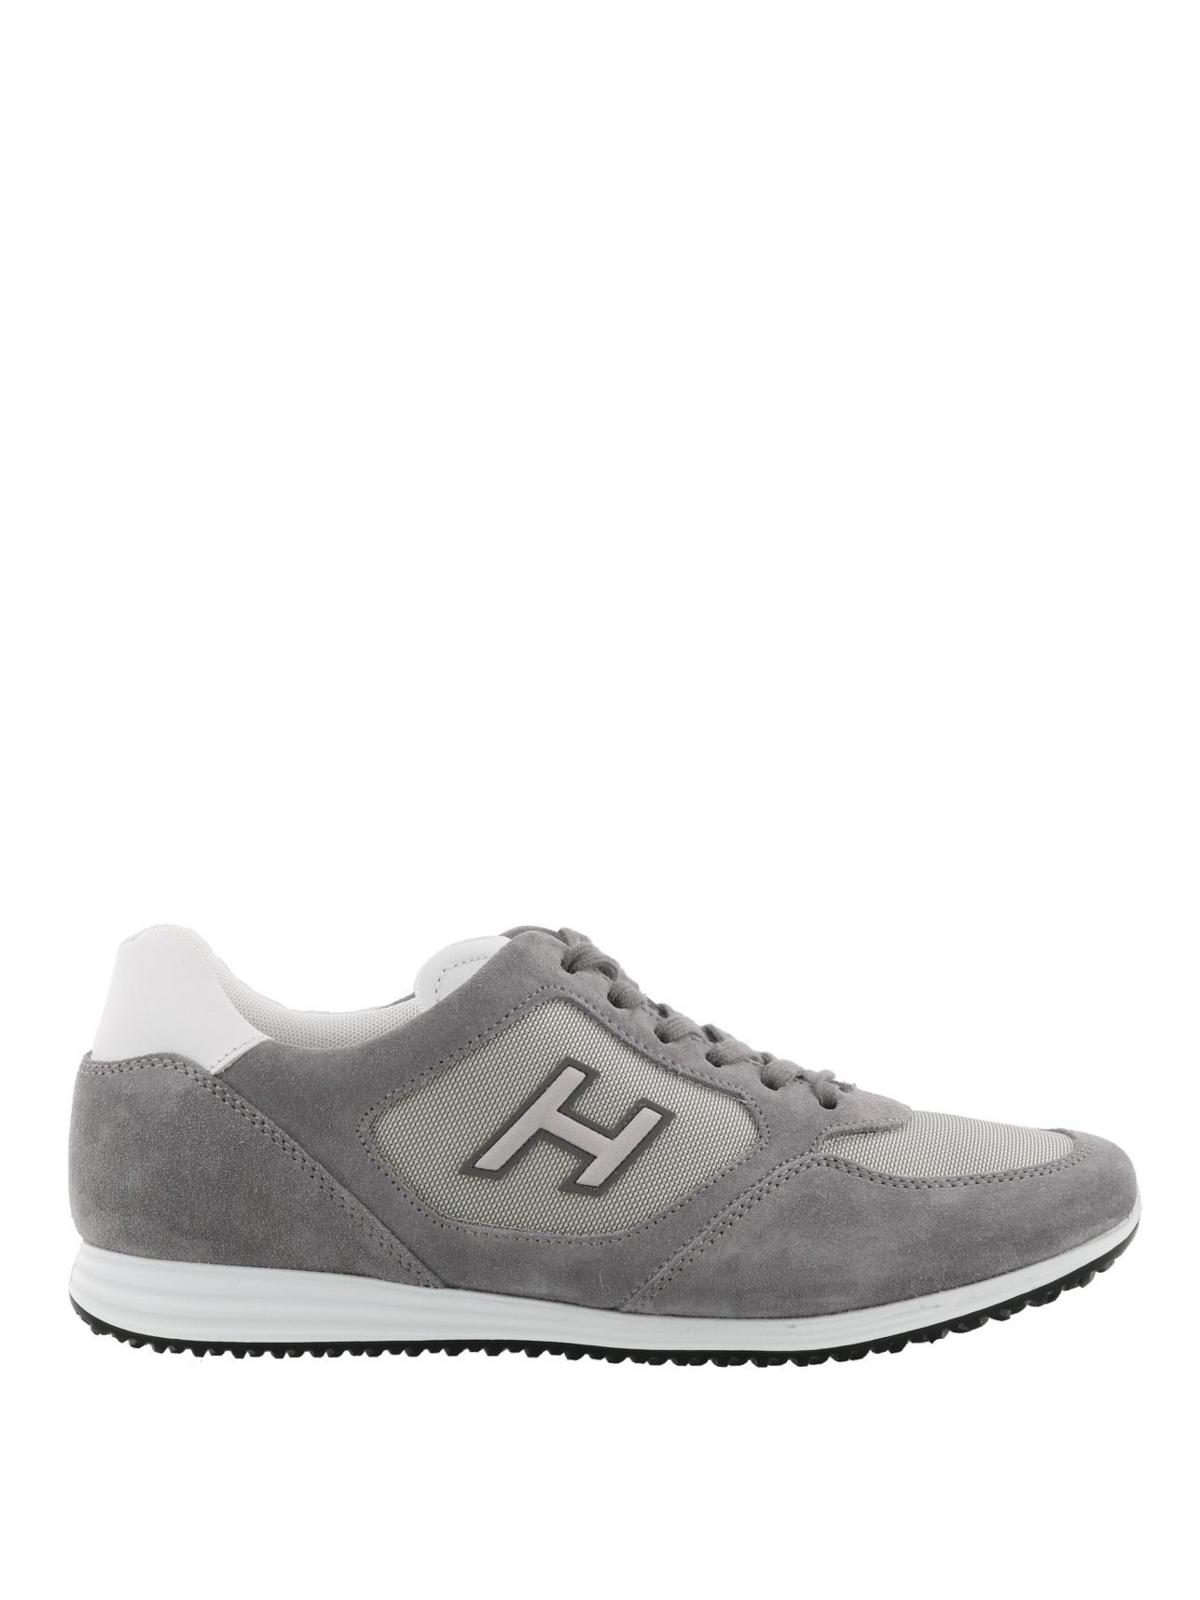 Hogan - Olympia H205 grey suede sneakers - trainers - HXM2050Y810I9L431L